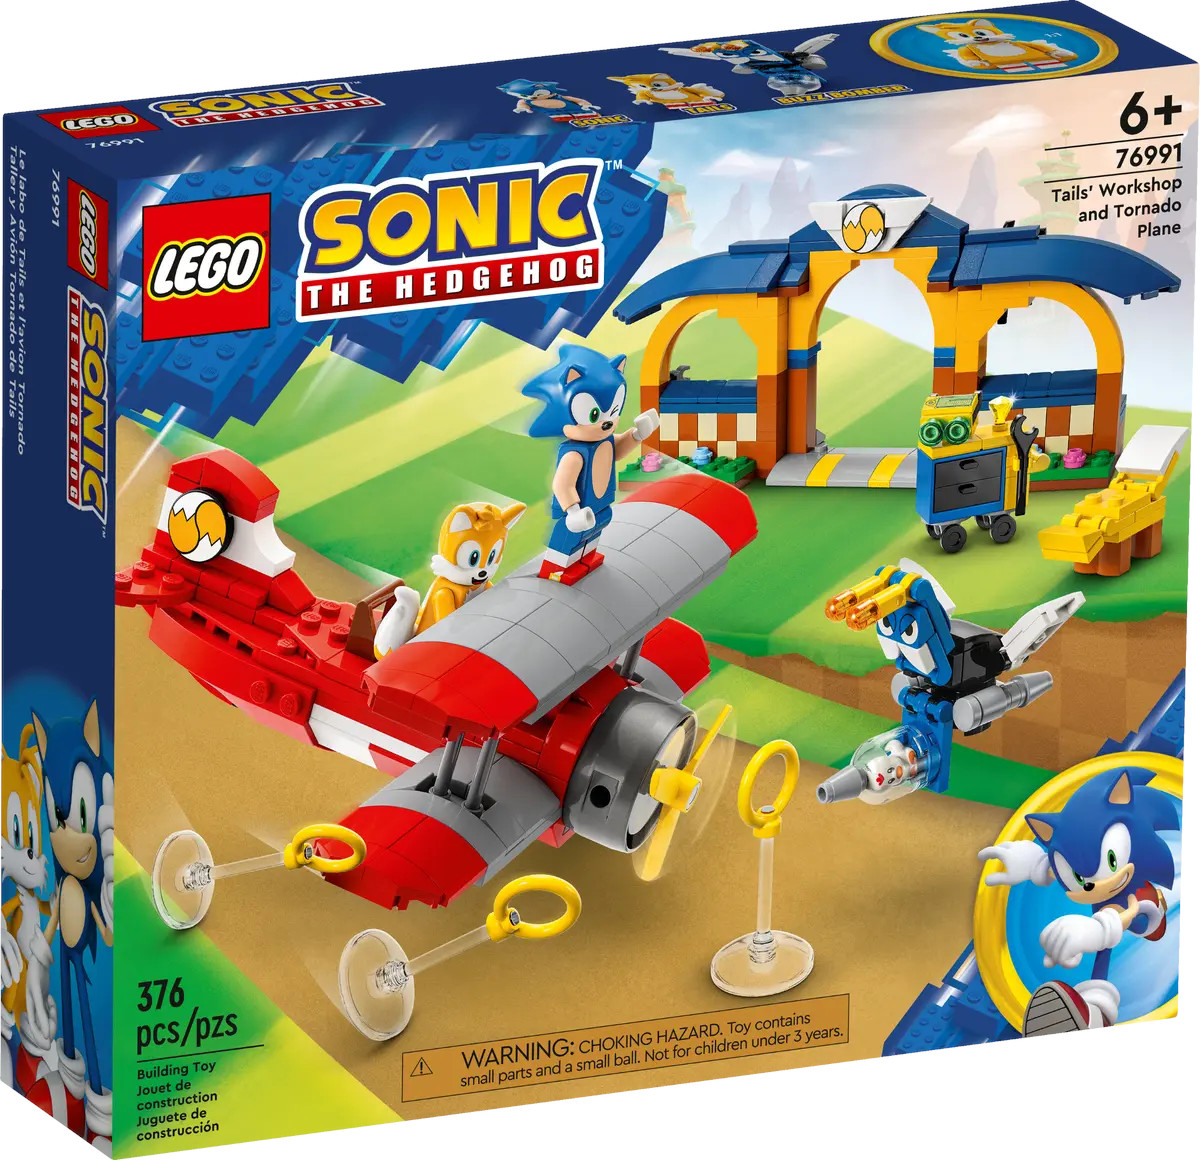 LEGO Sonic The Hedgehog Tails' Workshop & Tornado Plane 76991